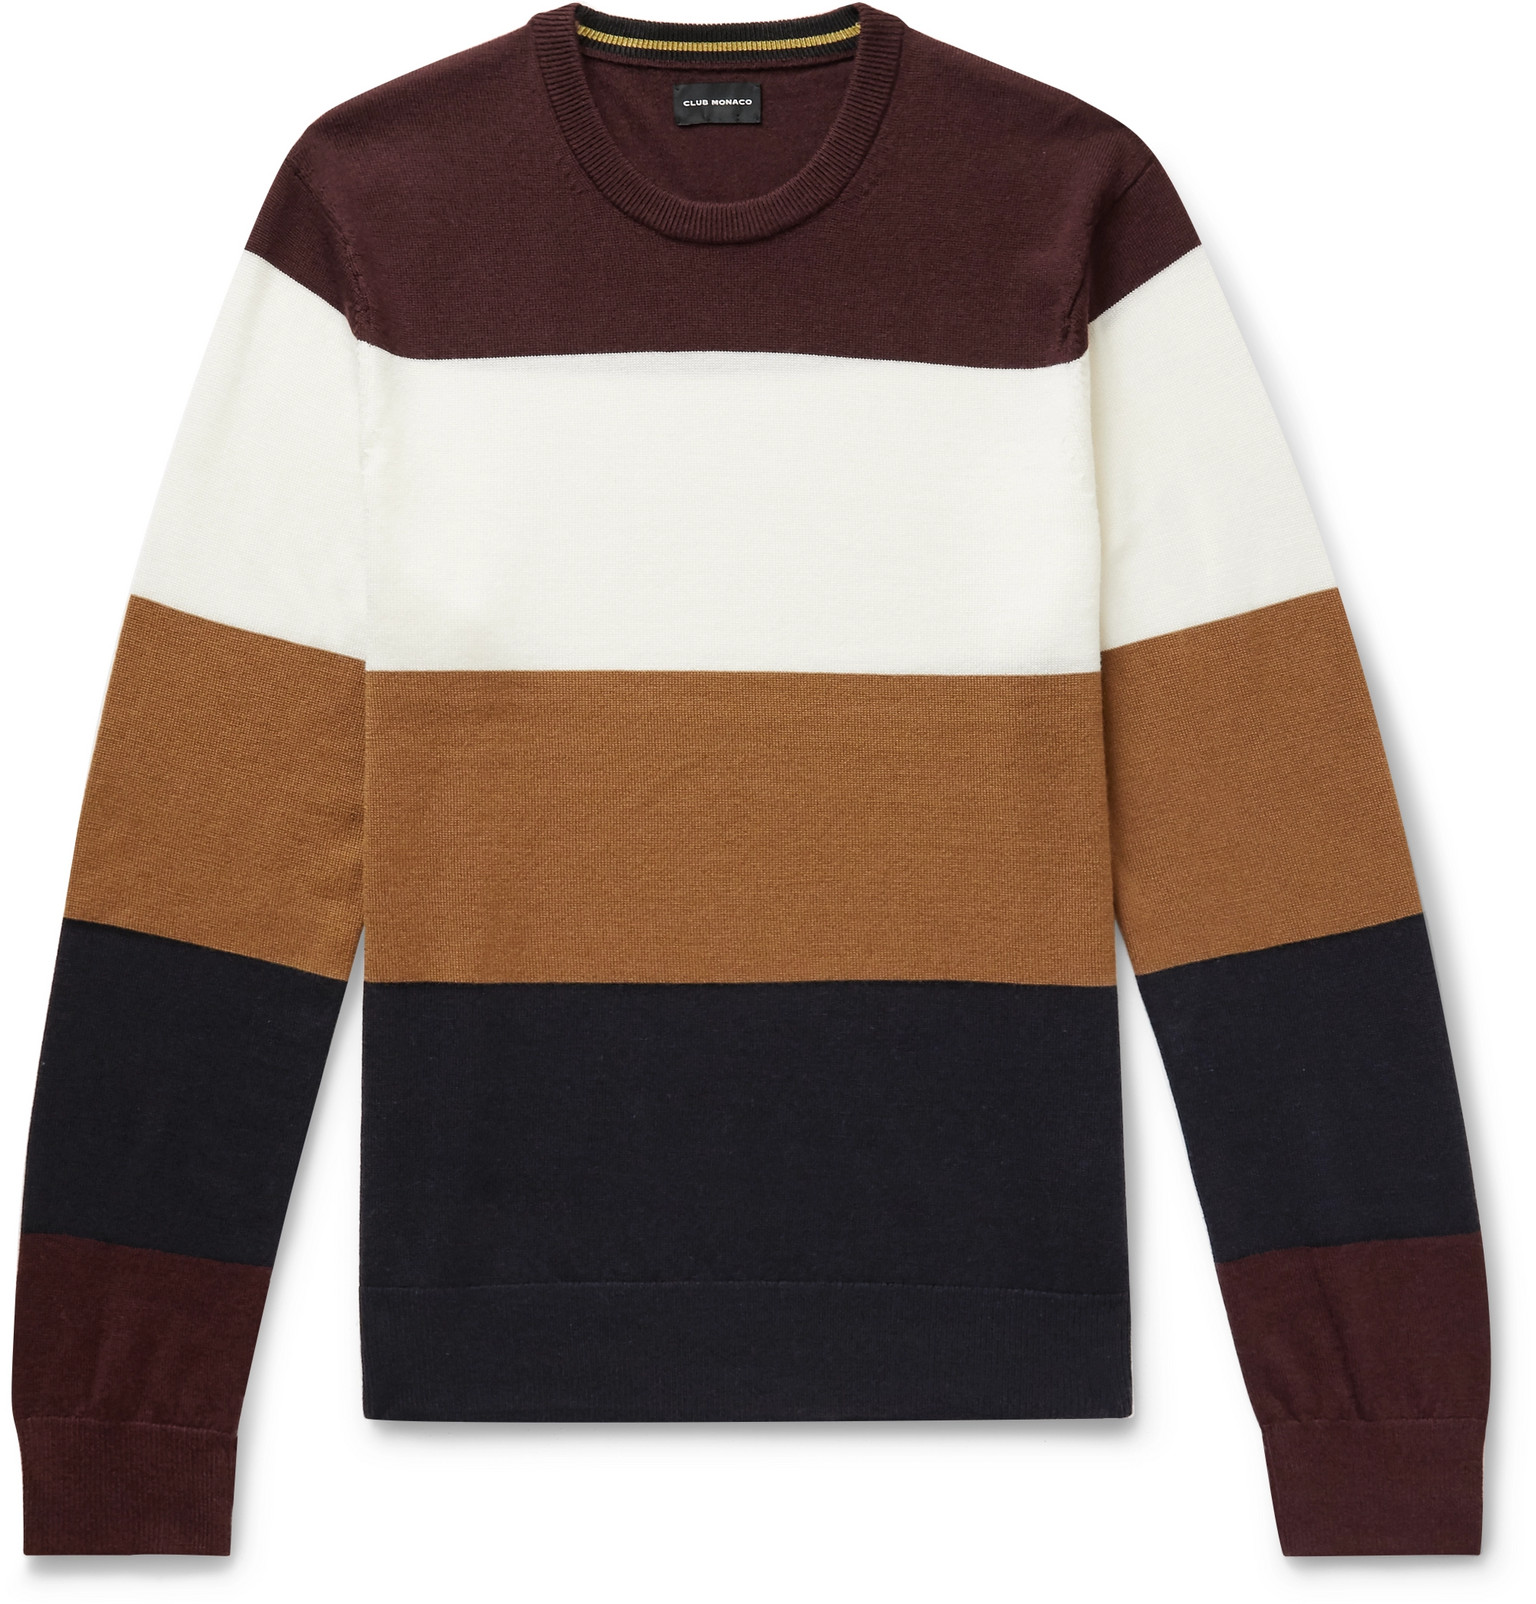 Club Monaco - Colour-Block Merino Wool Sweater - Men - Burgundy | The ...